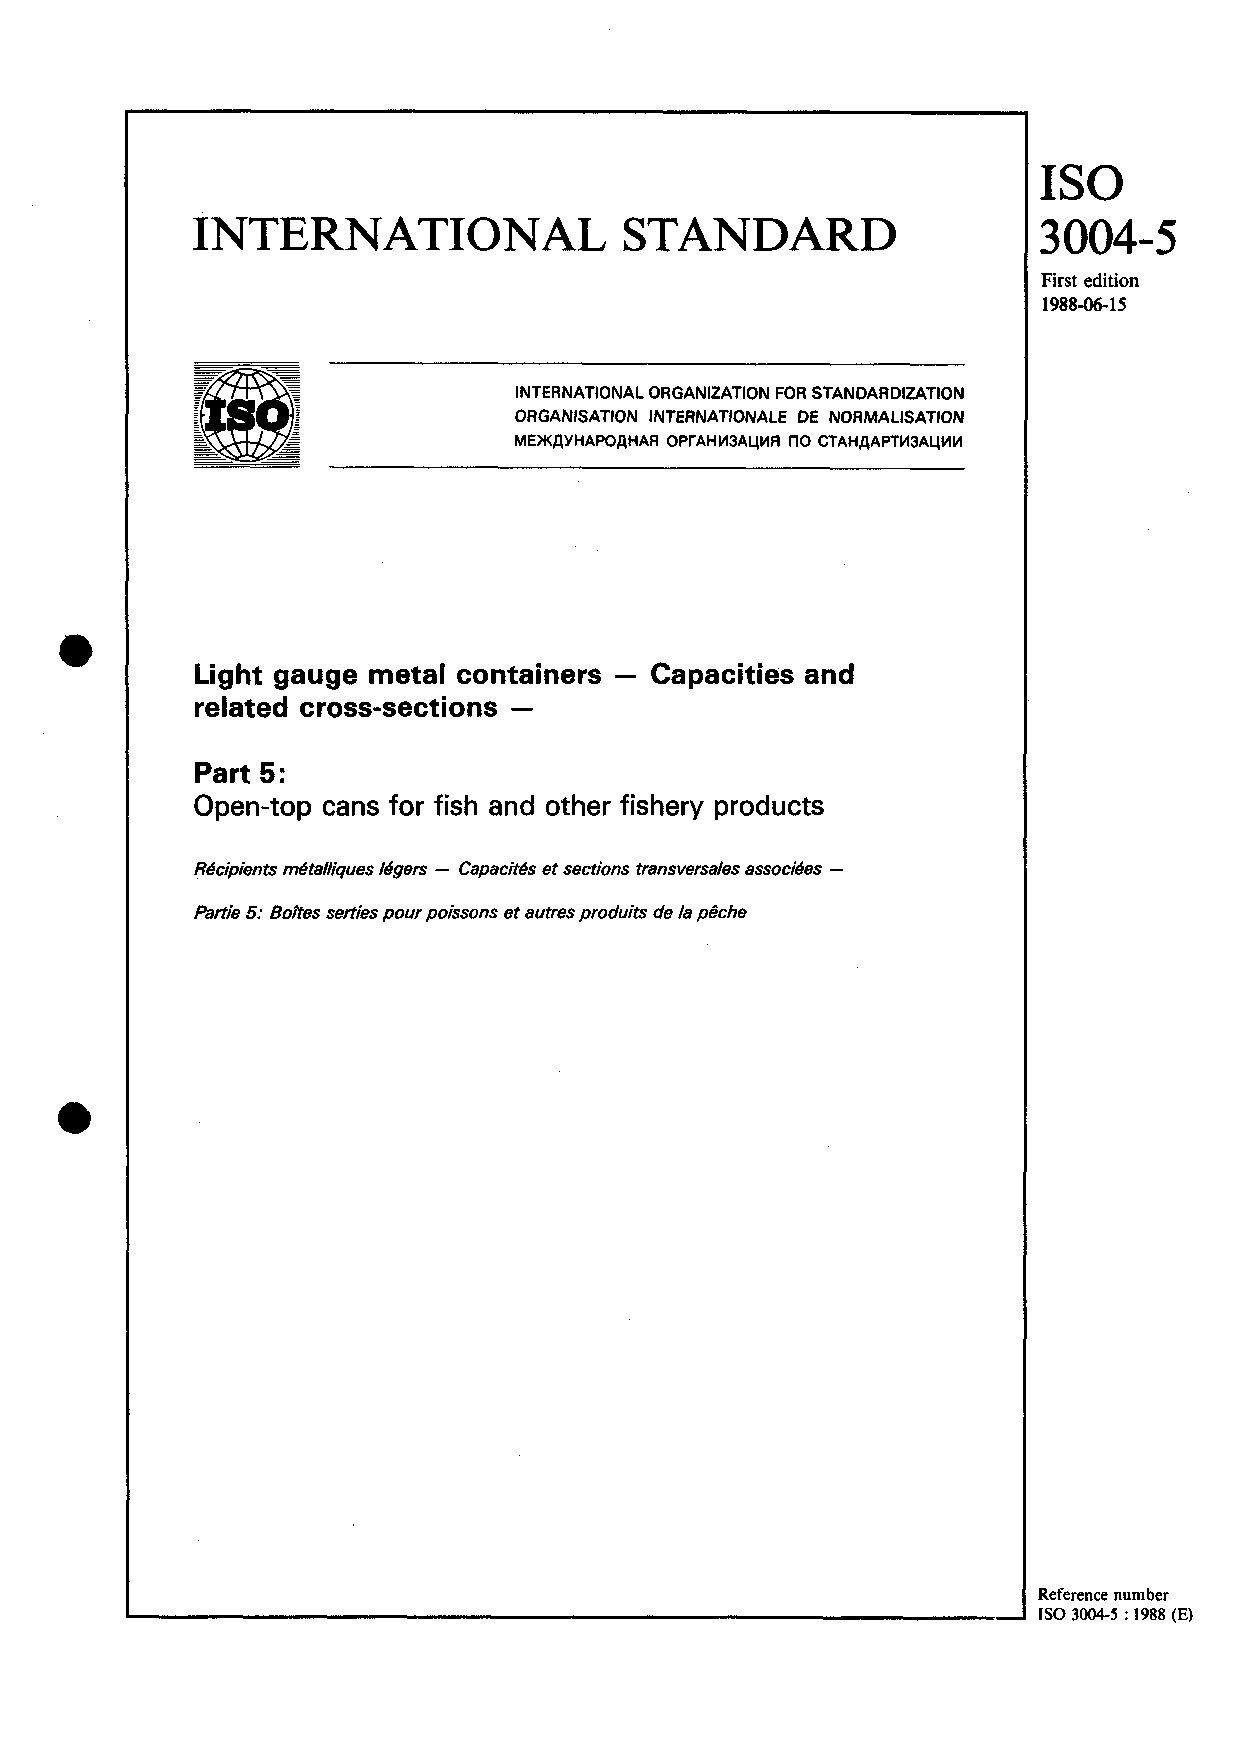 ISO 3004-5:1988封面图